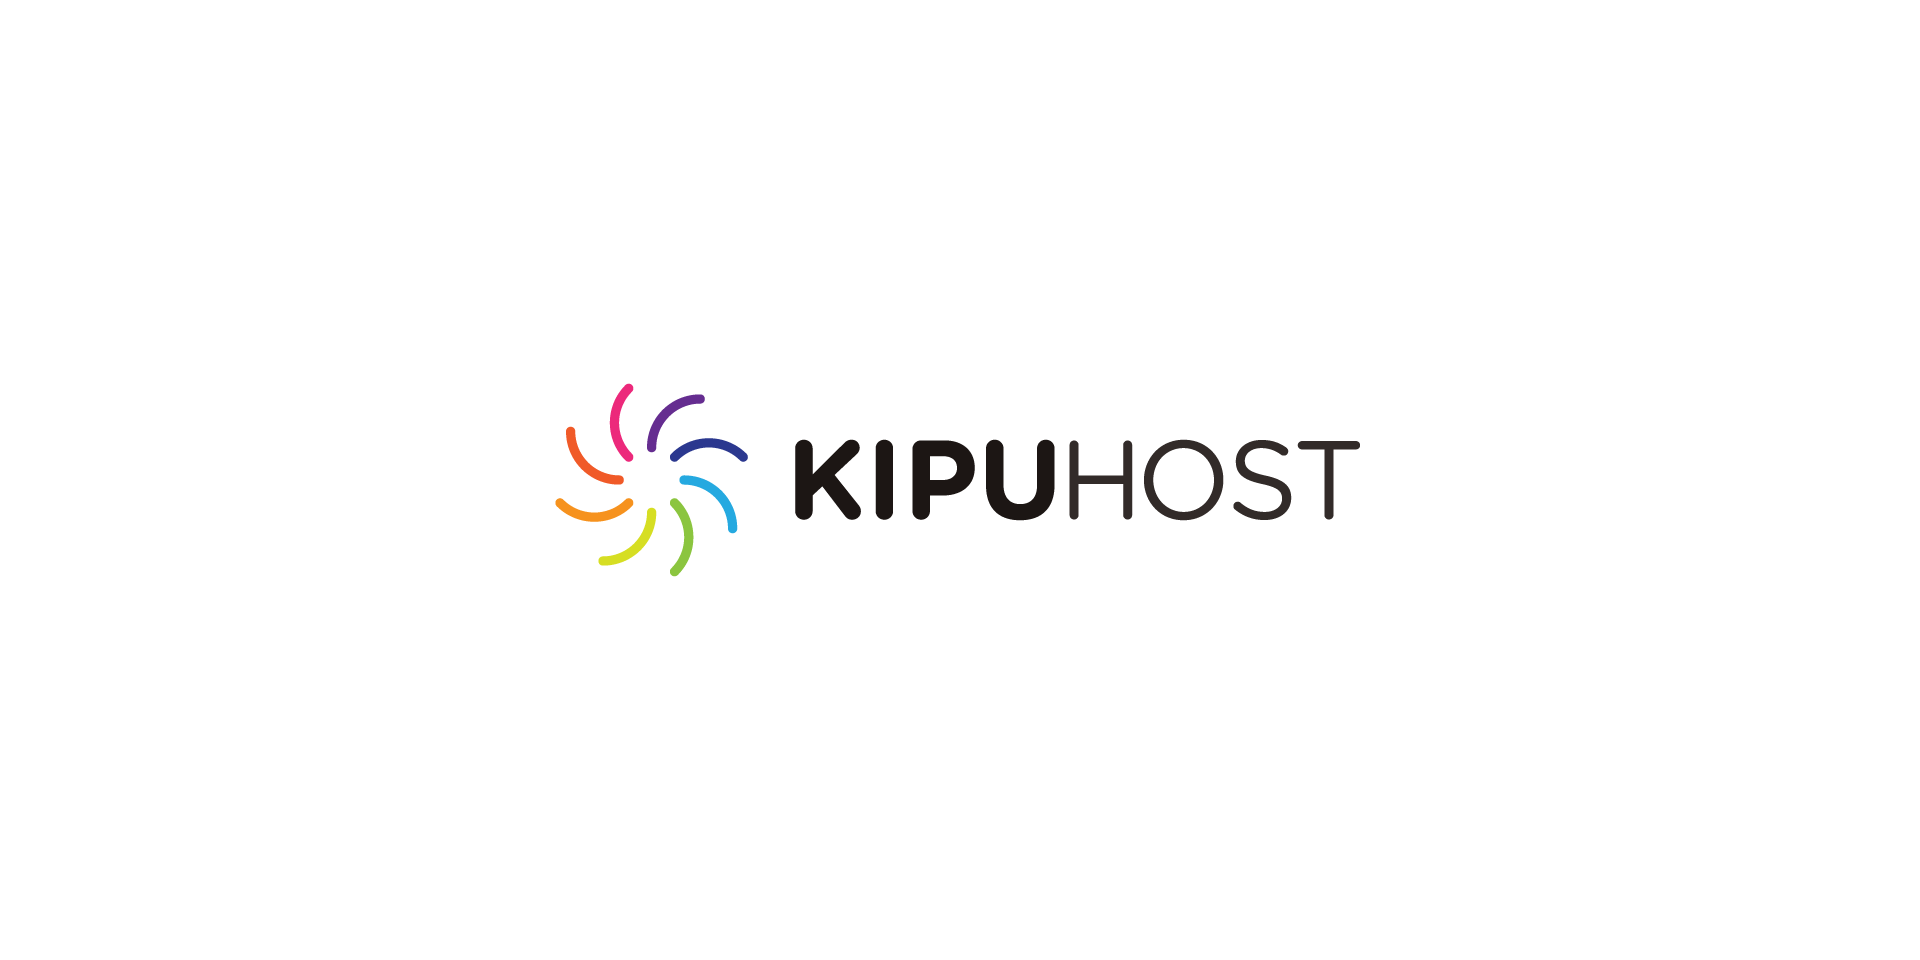 KipuHost logo